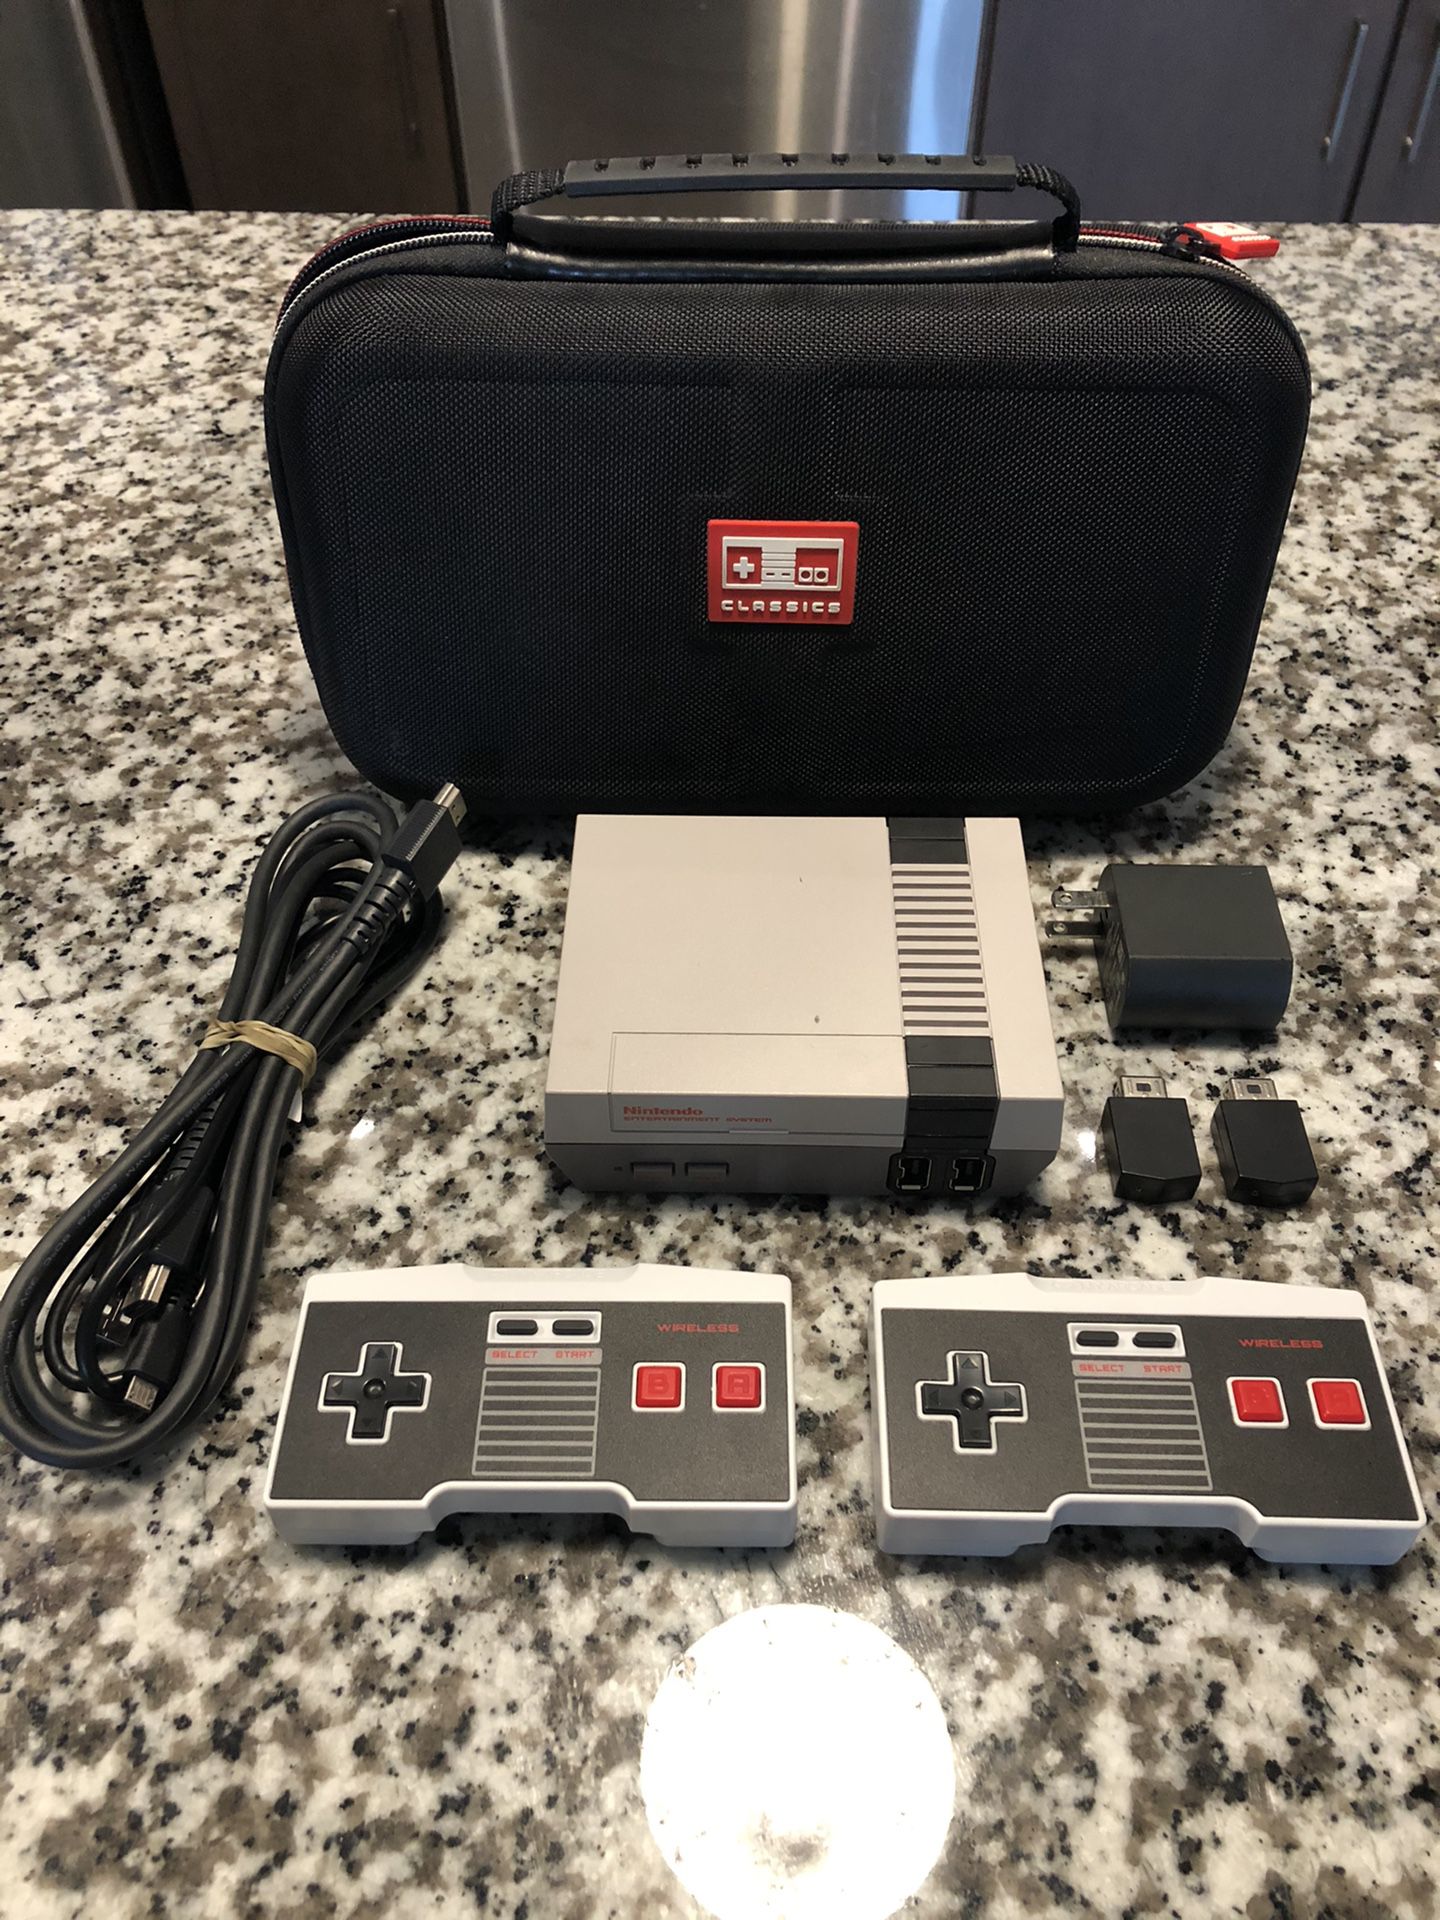 Nintendo NES Classic Edition CLV-001 W 2 Wireless Remotes and case